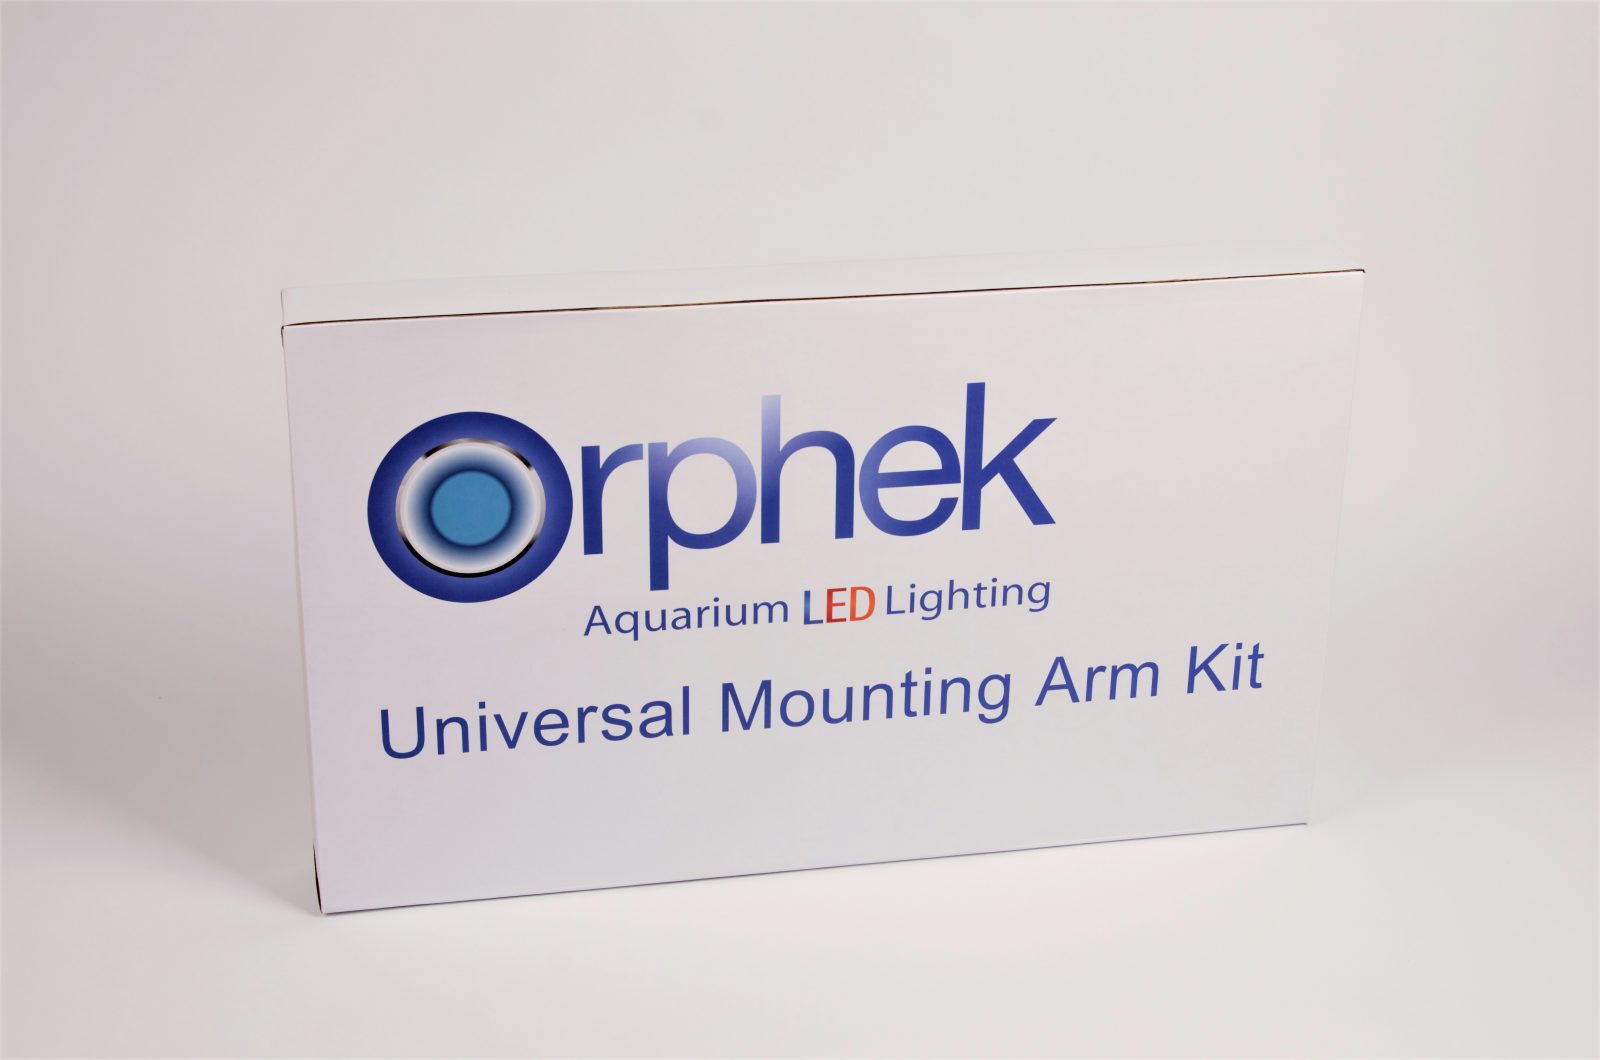 Orphek-aquarium-led-lighting-mounting-arm-kit_3583-1600x1060.jpg